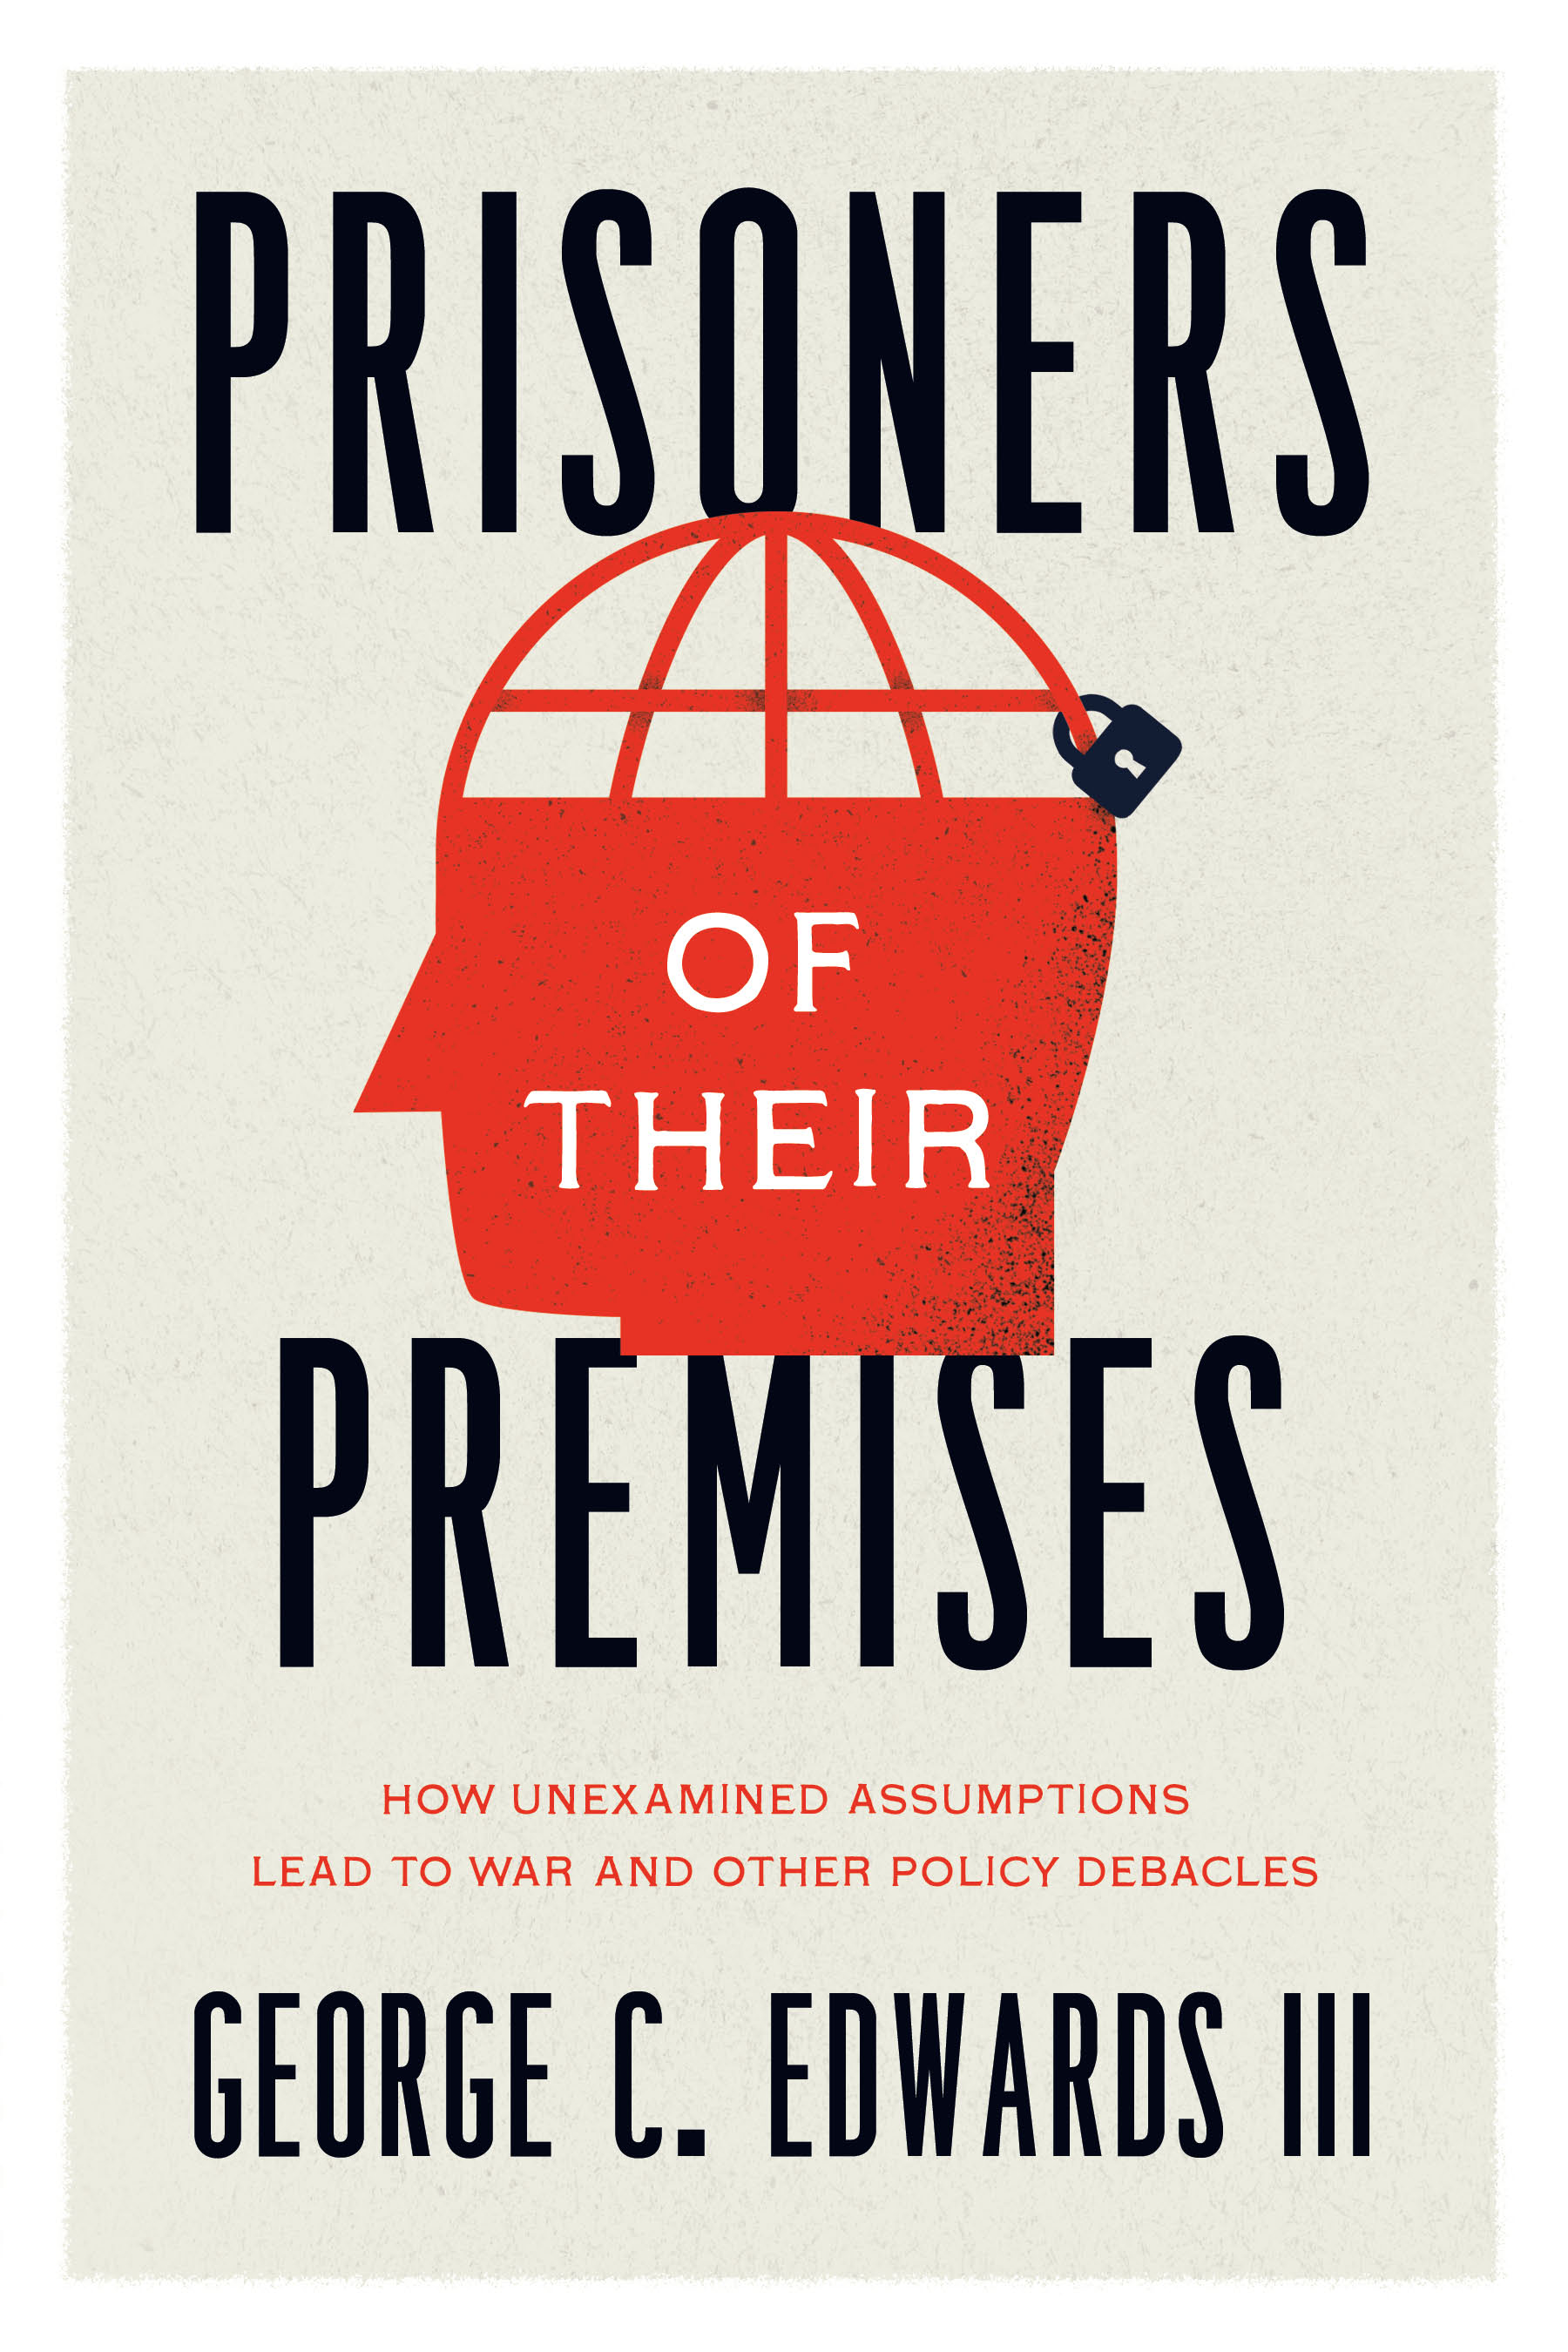 Prisoners of Their Premises - 15-24.99